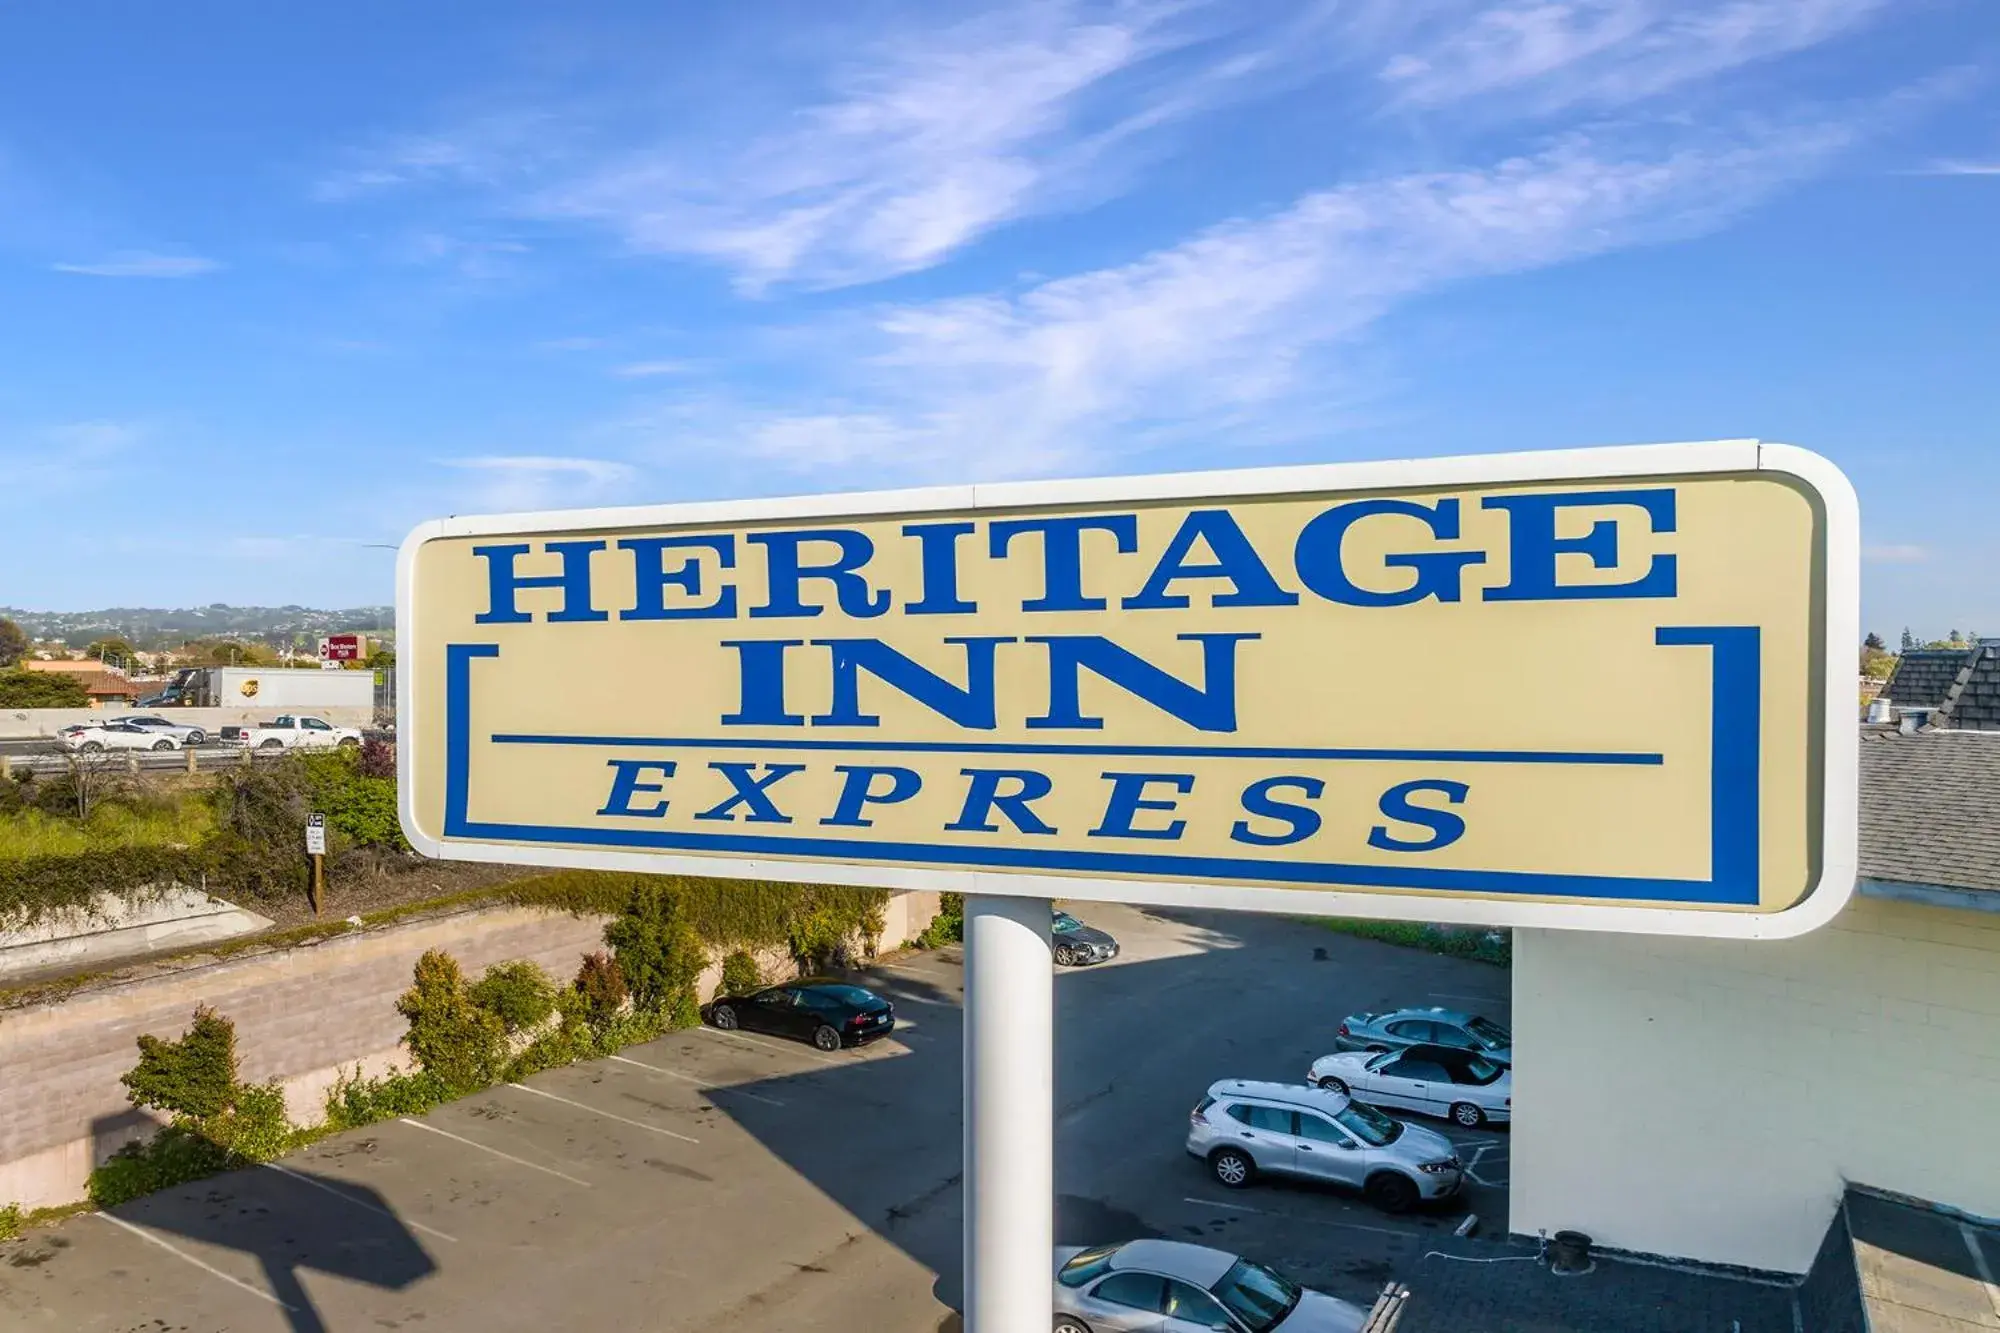 Property logo or sign in Heritage Inn Express Hayward